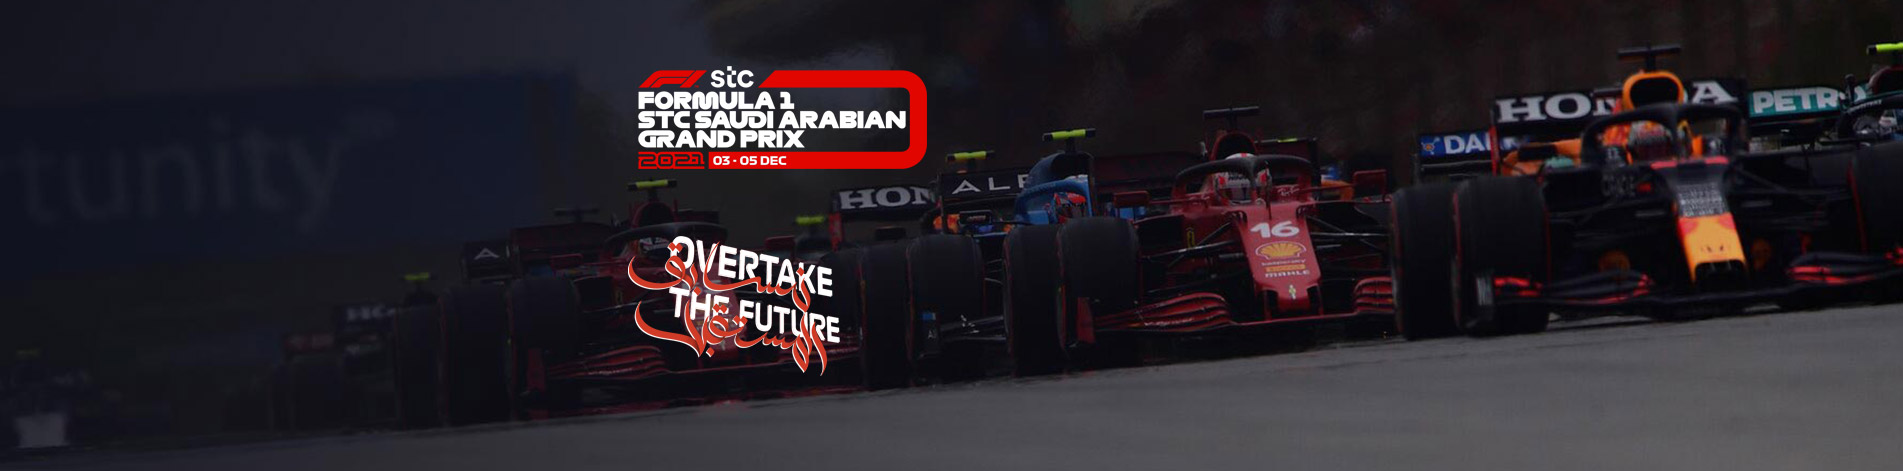 The F1® stc Saudi Arabian Grand Prix